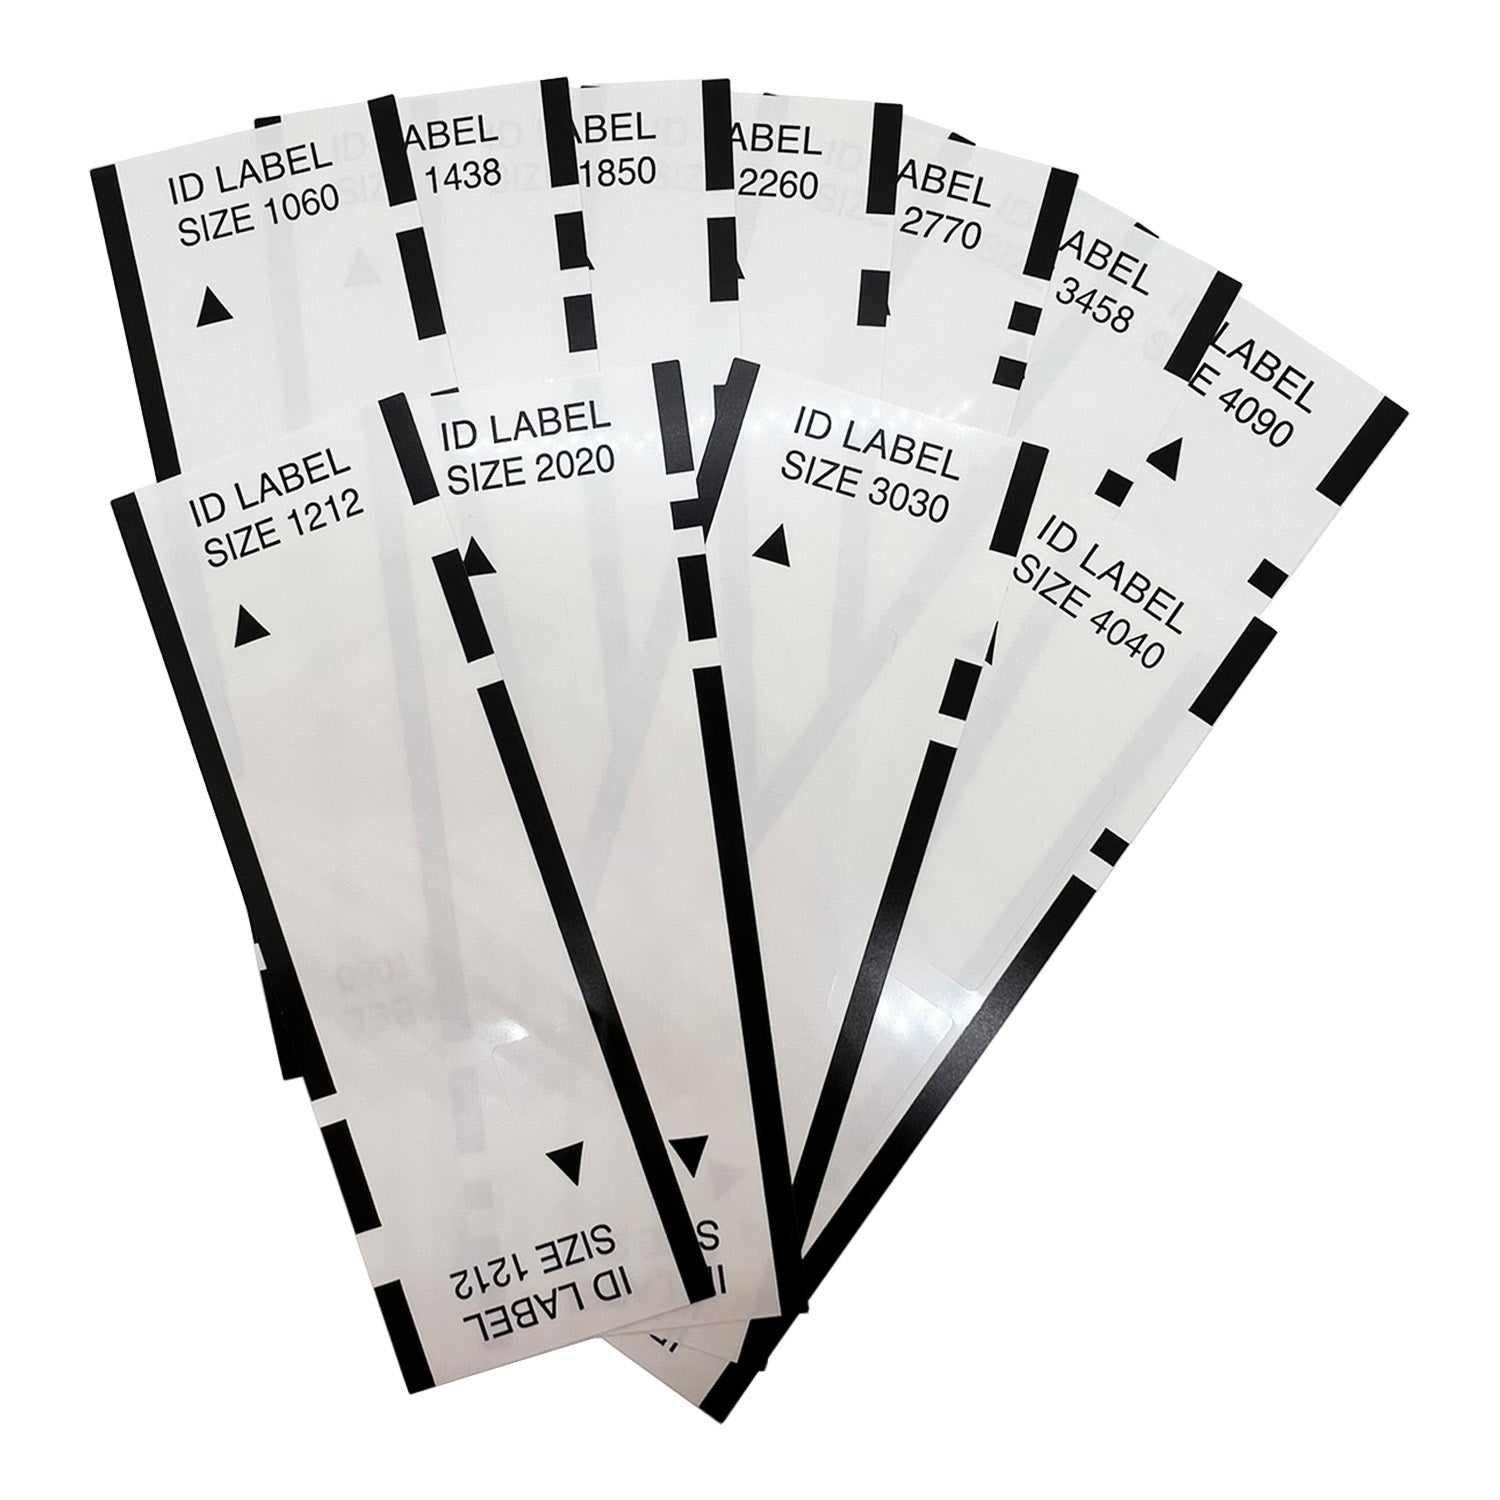 Stampcreator ID Label Set – Rubber Stamp Materials